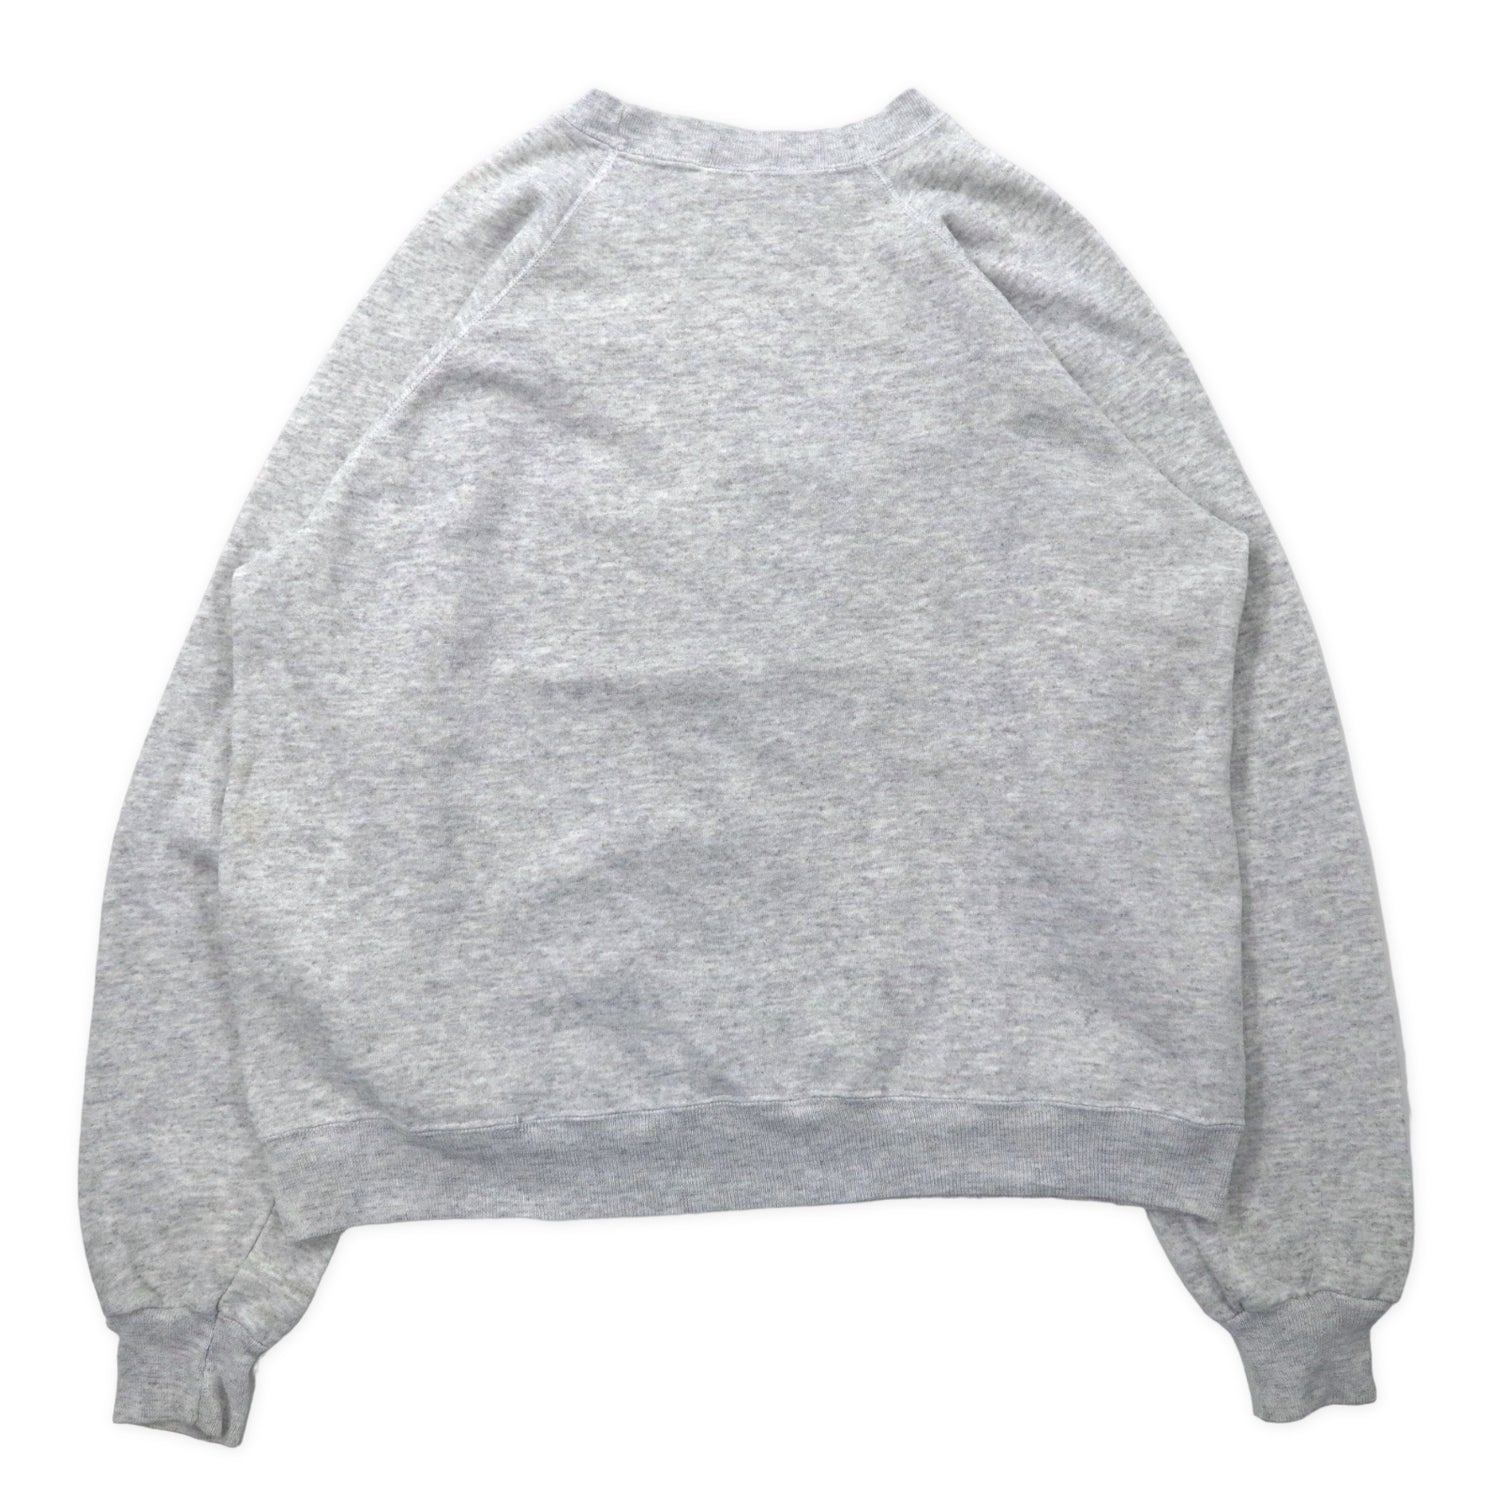 Hanes ActiveWear USA MADE 90s College print Sweatshirt XL Gray 